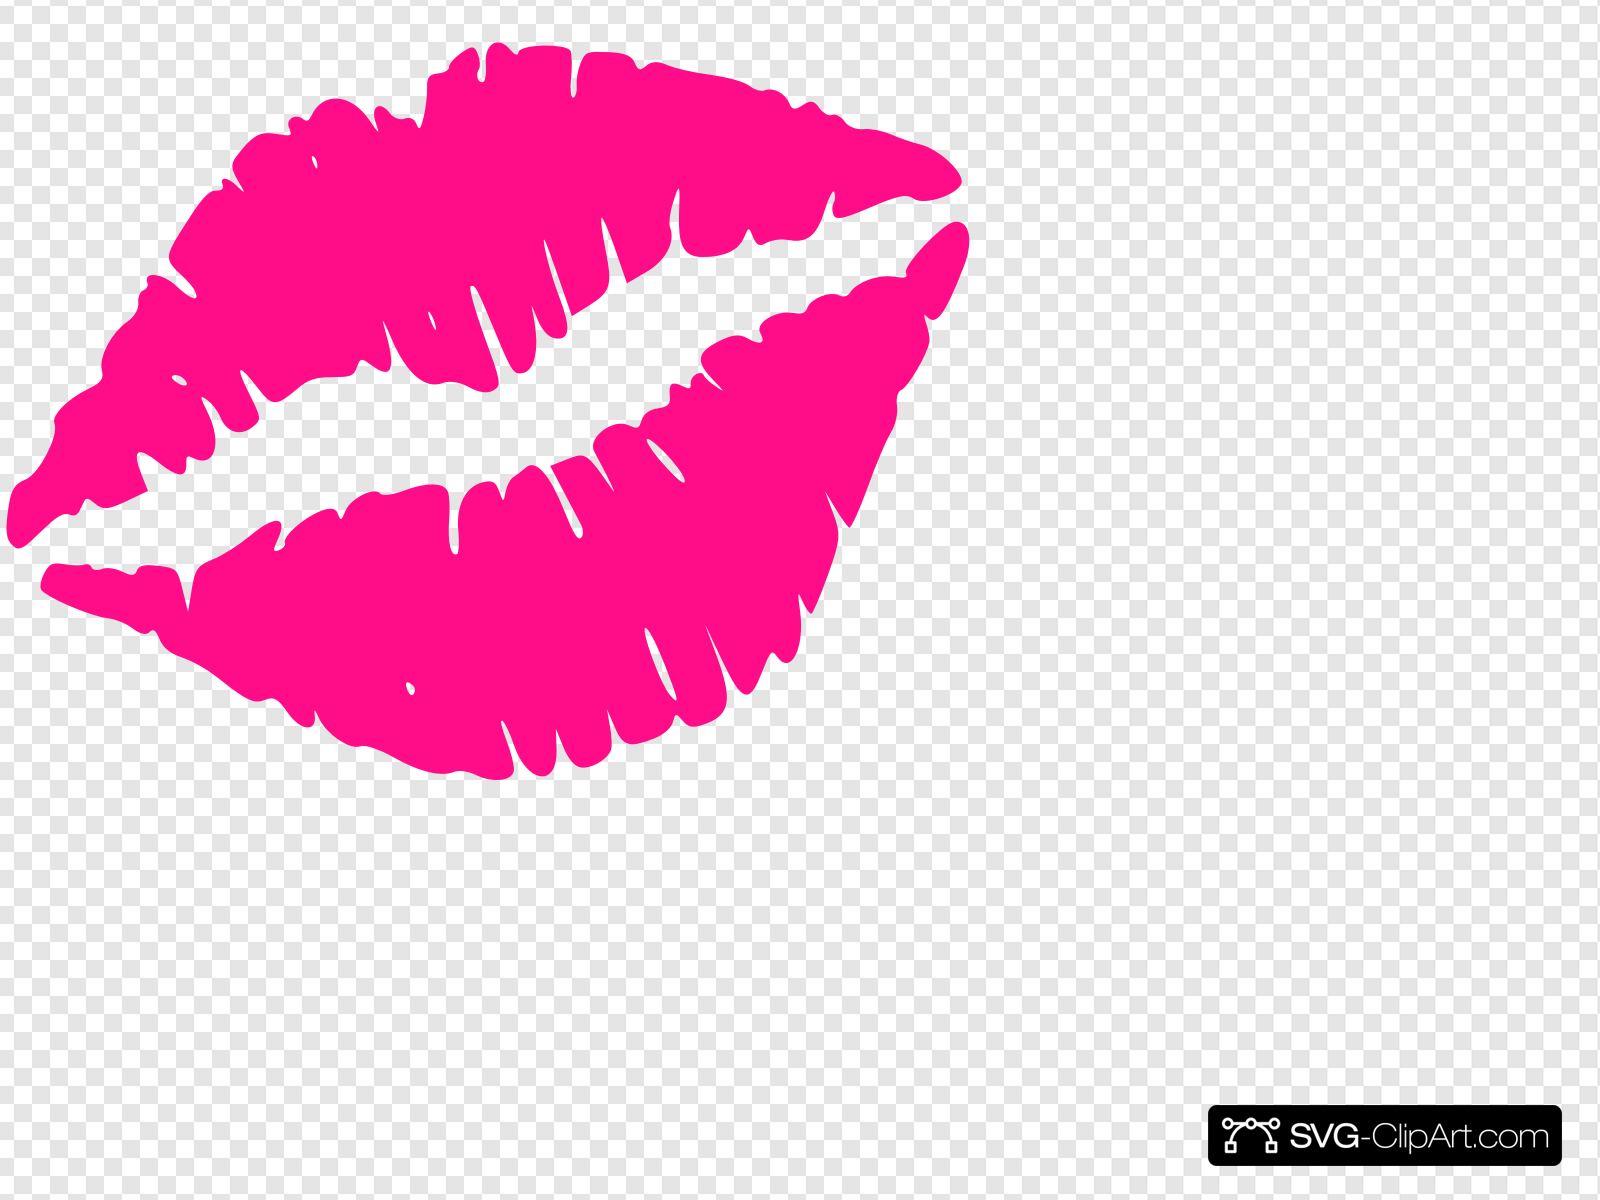 Download Lips clipart svg, Lips svg Transparent FREE for download on WebStockReview 2020